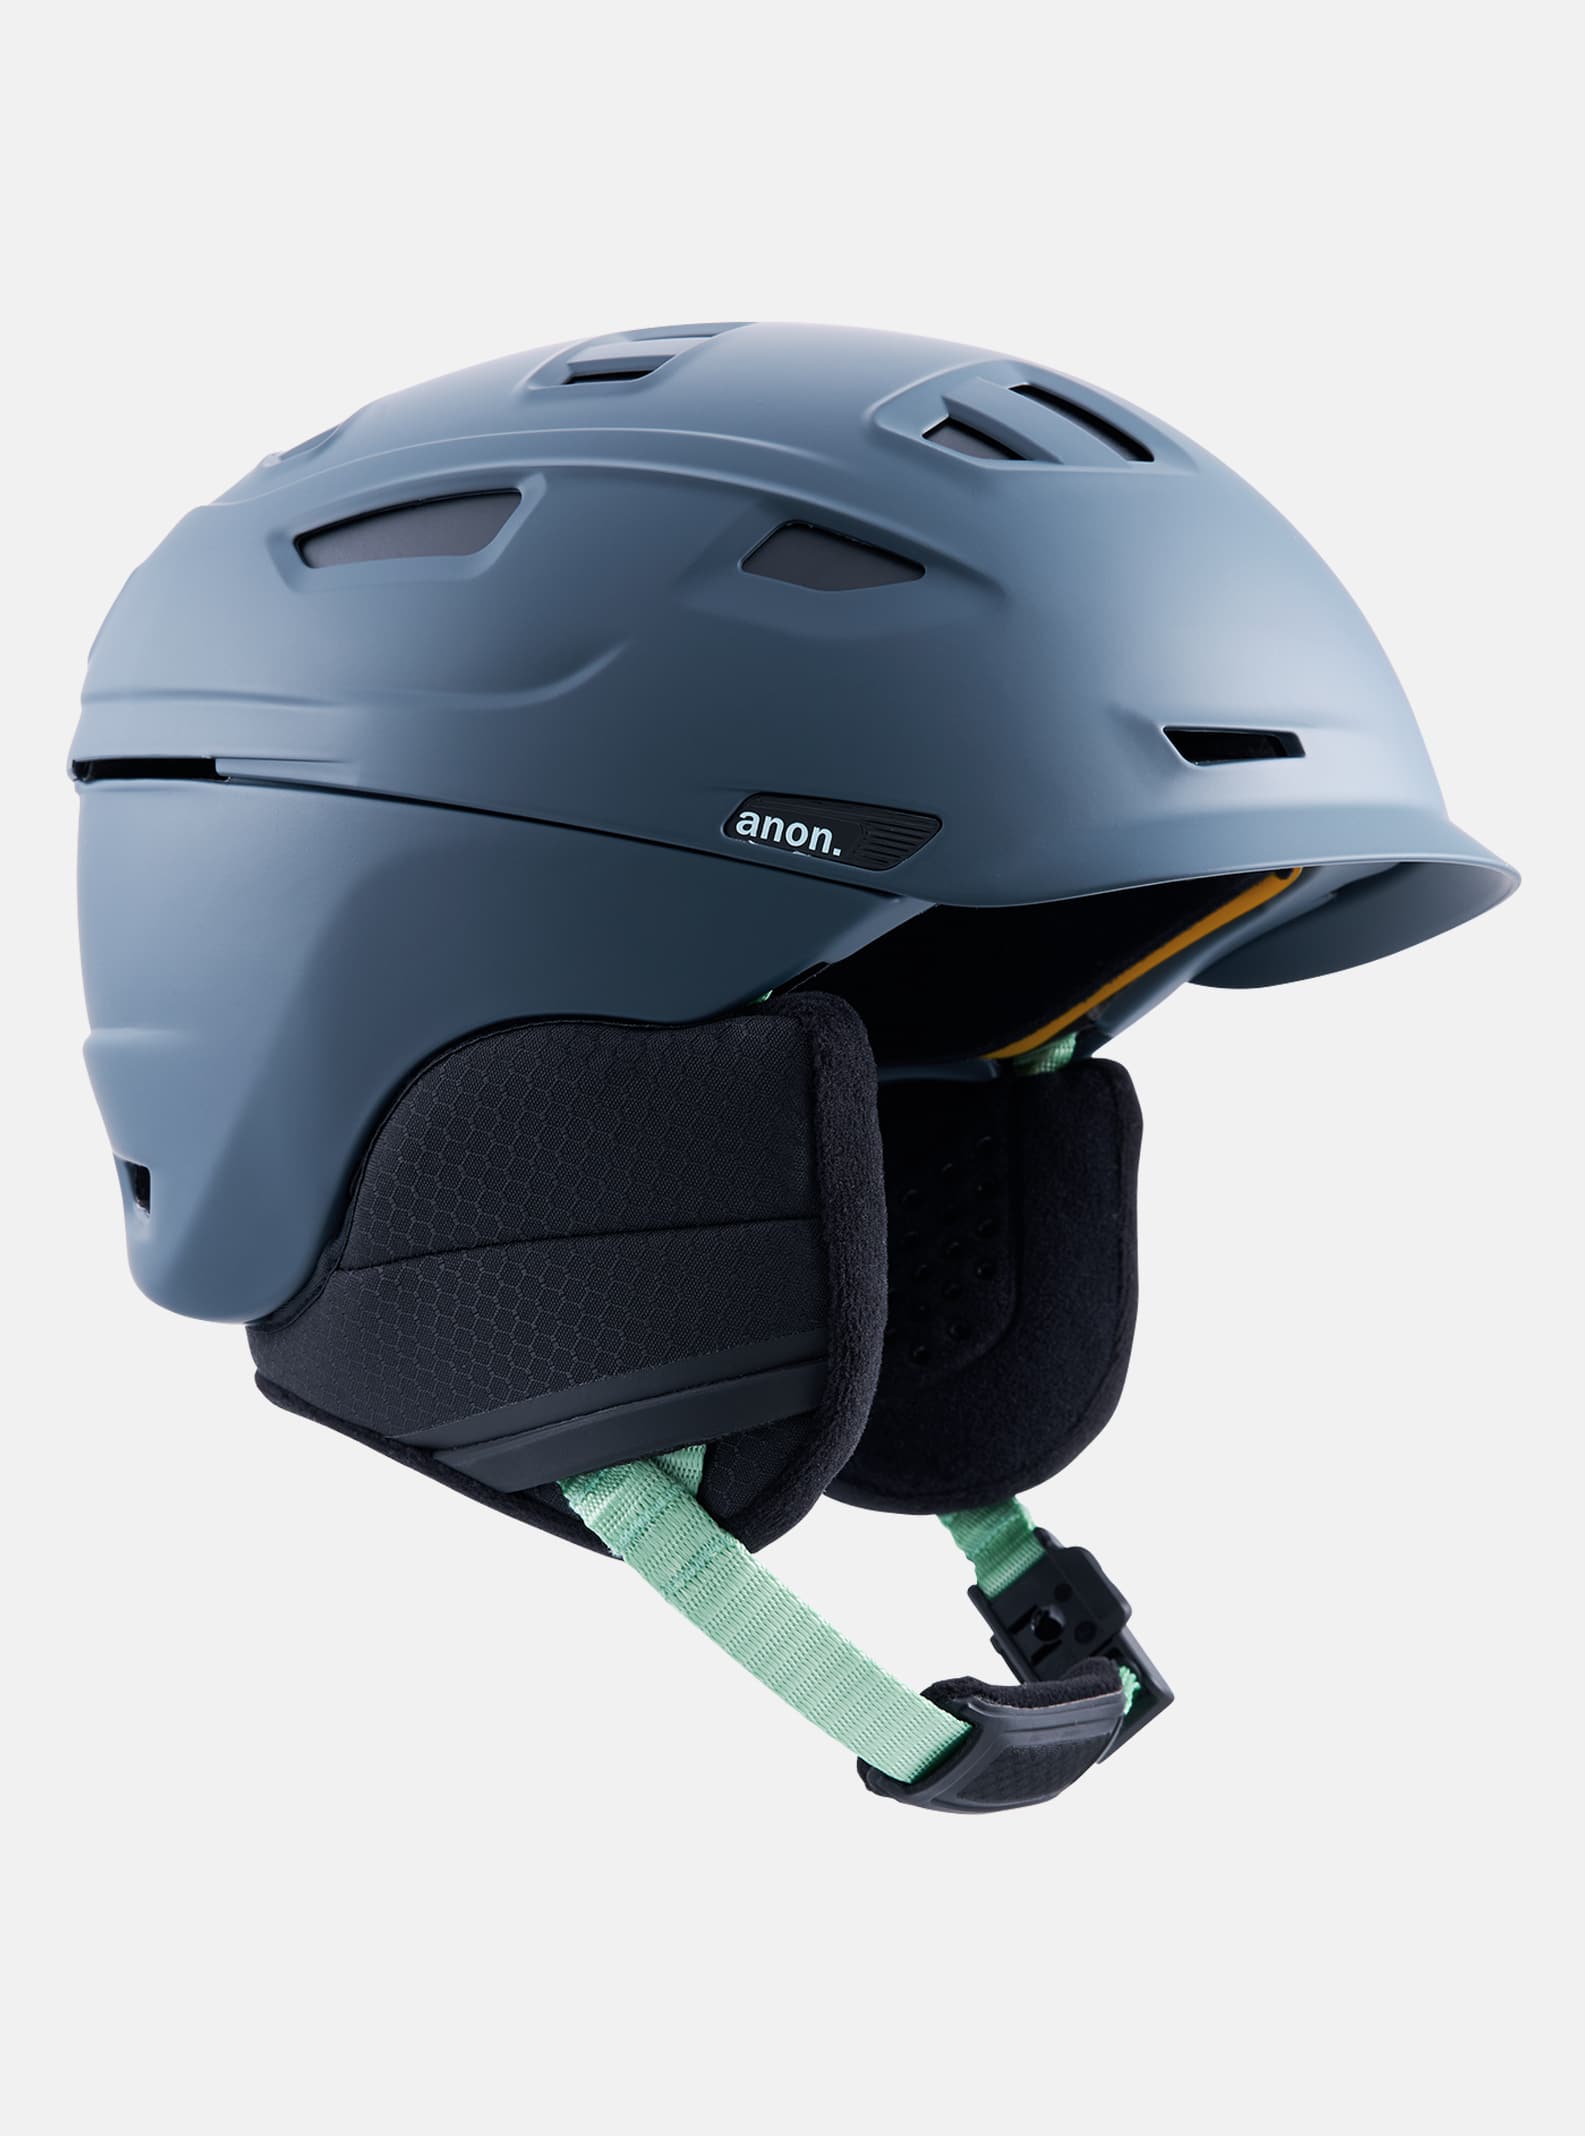 Anon Prime MIPS® Ski & Snowboard Helmet | Anon Optics Winter 2023 US